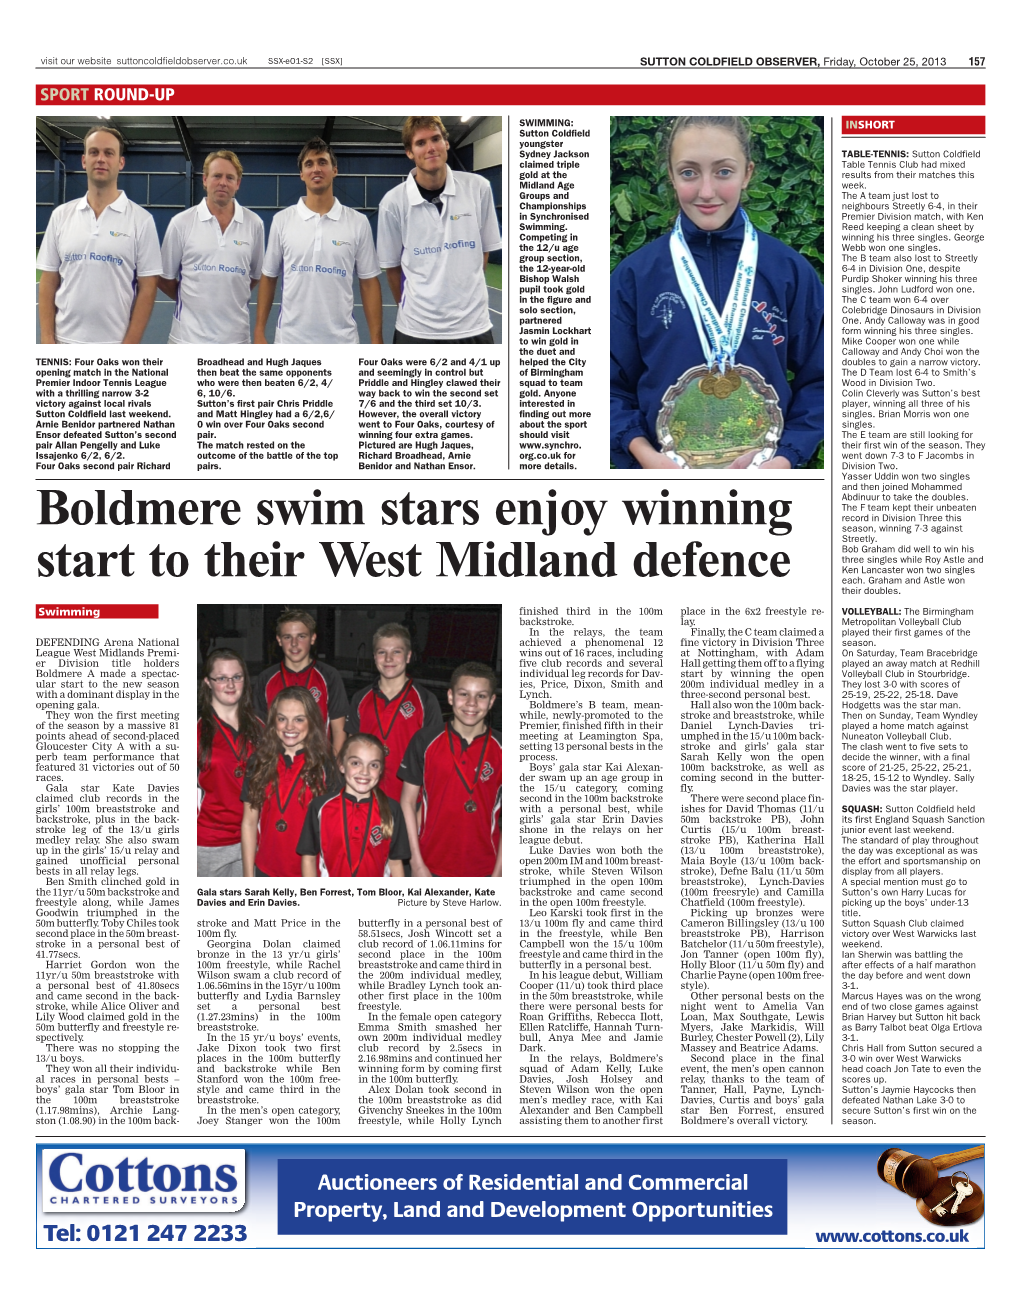 Boldmere Swim Stars Enjoy Winning Start to Their West Midland Defence